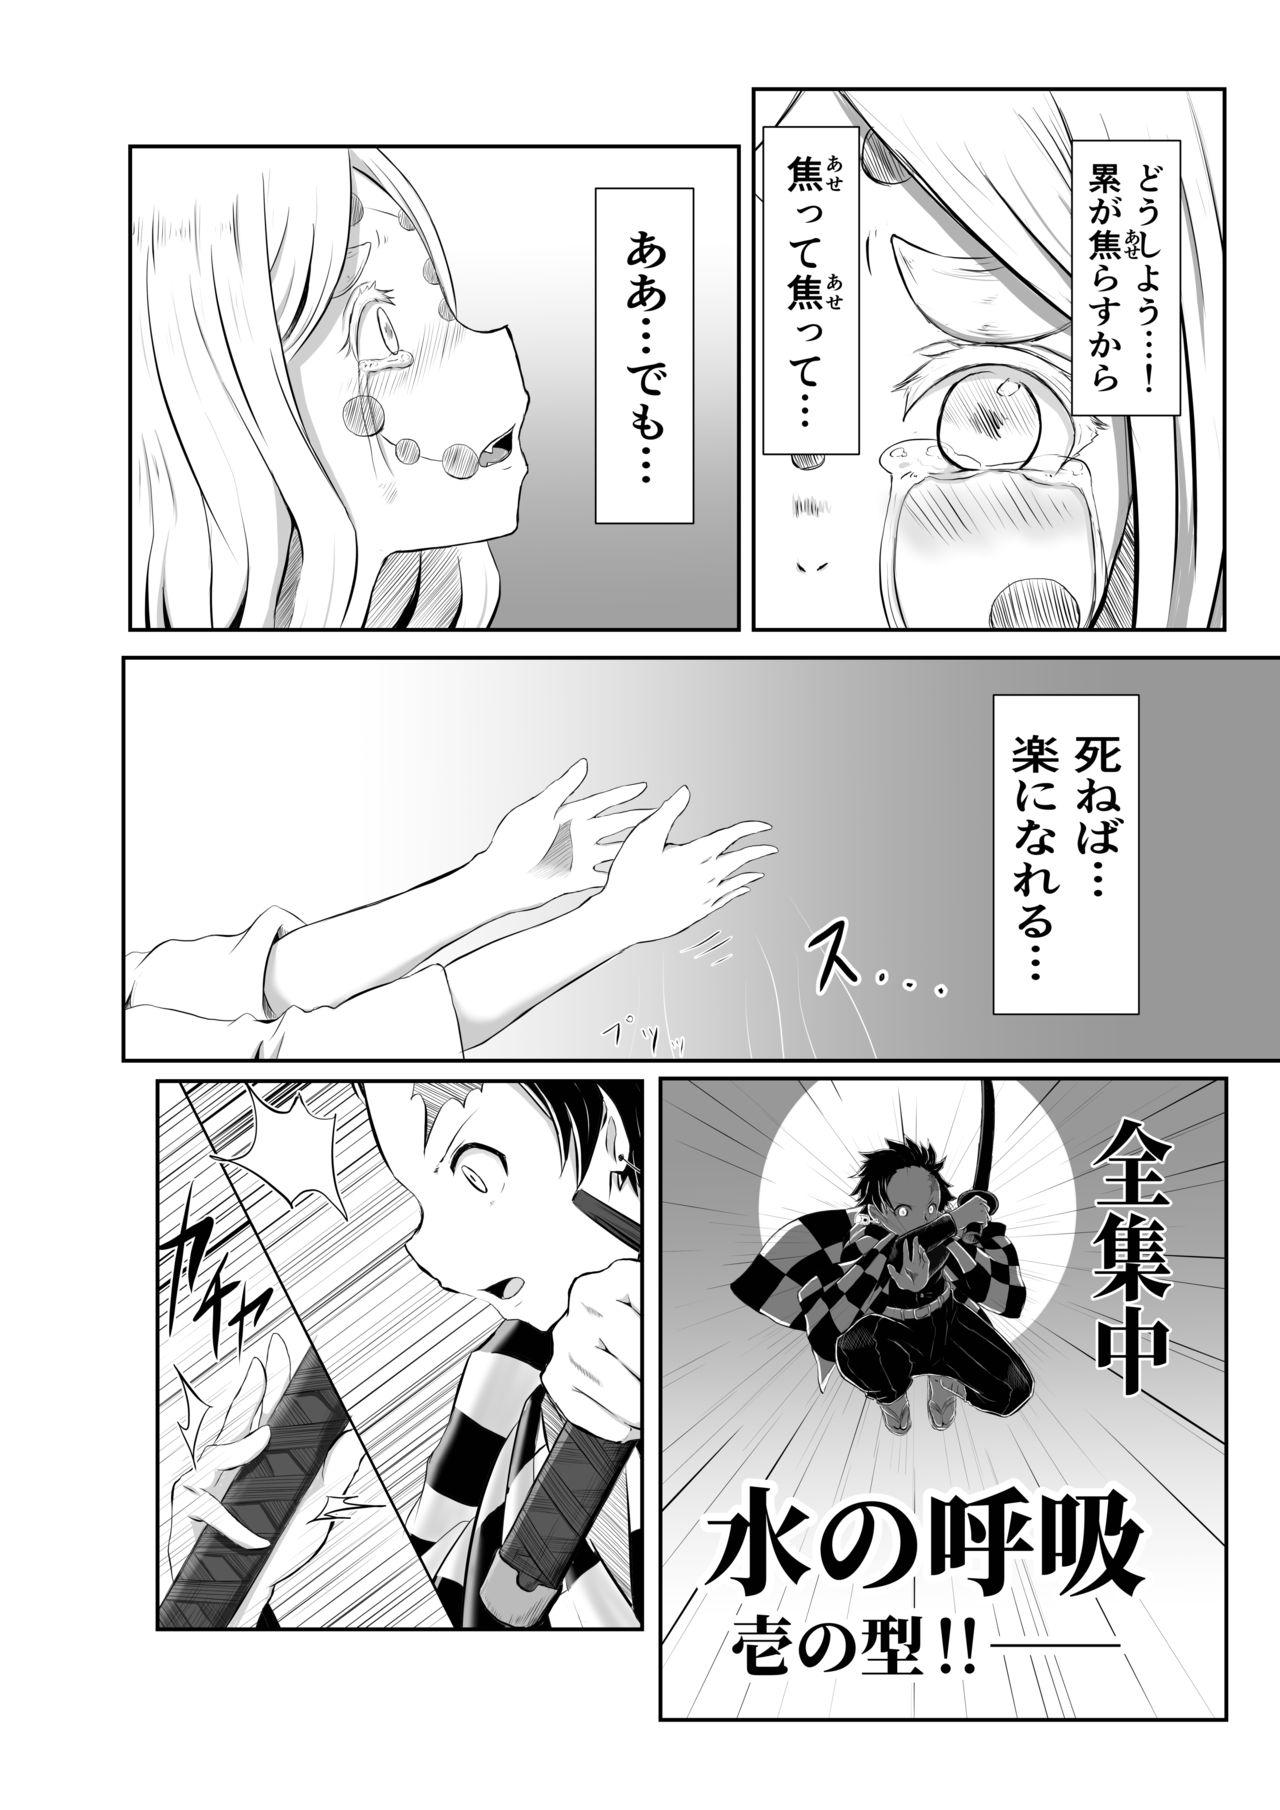 Pussylicking Hinokami Sex. - Kimetsu no yaiba | demon slayer Submission - Page 2